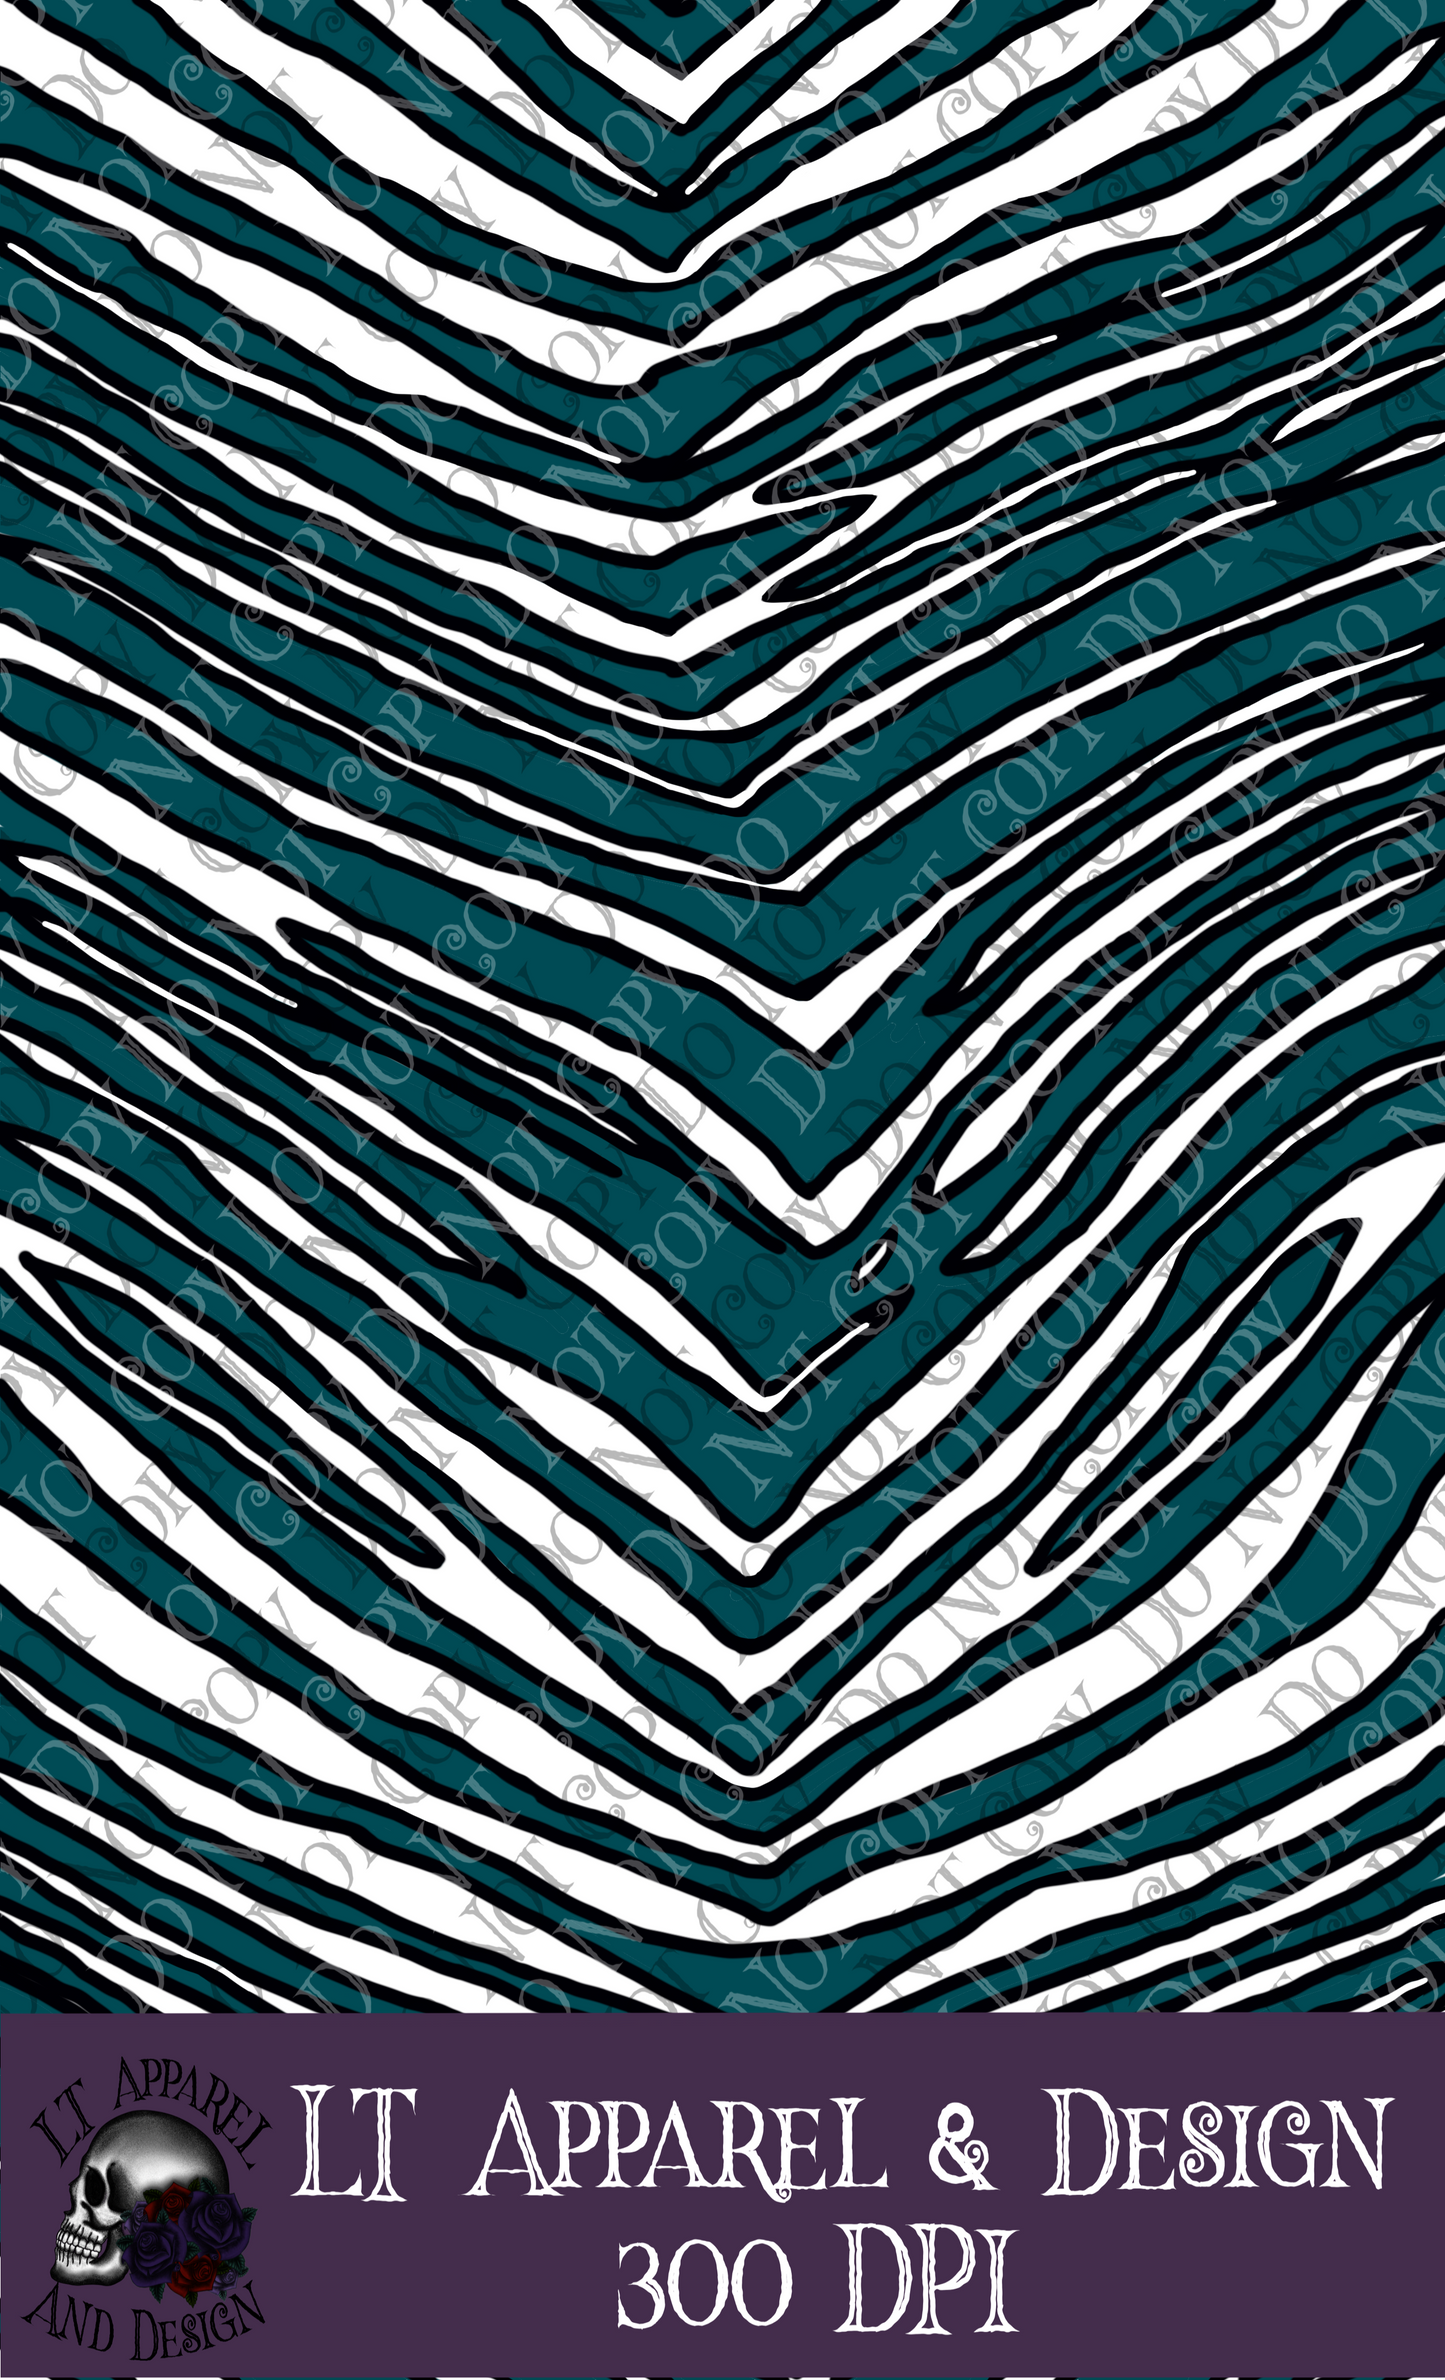 Zebra Sheet Not Seamless teal, black and white digital image